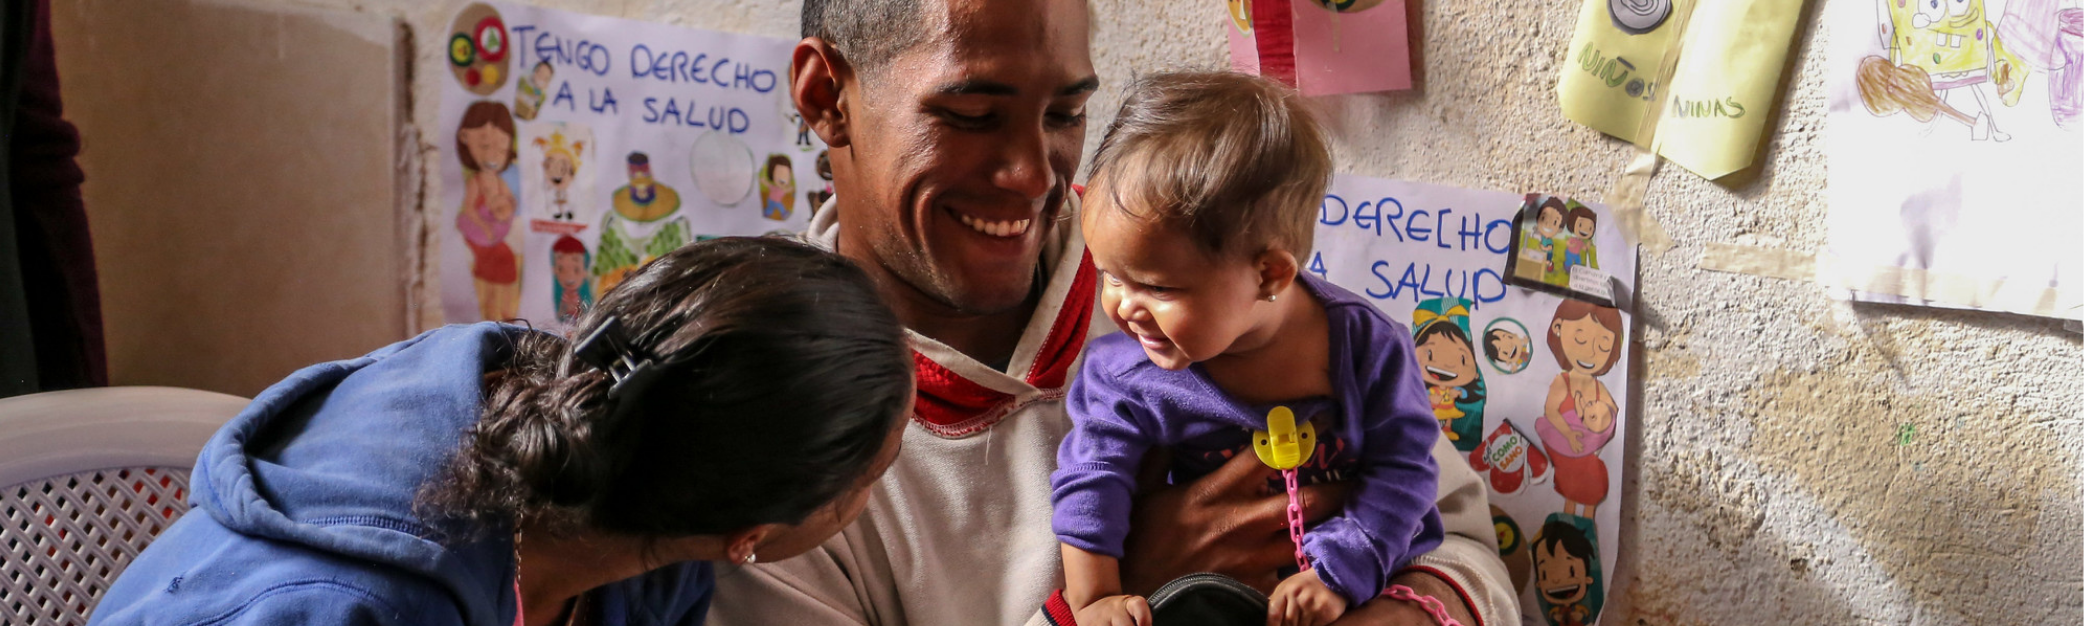 Análisis comparativo curricular para la primera infancia en América Latina